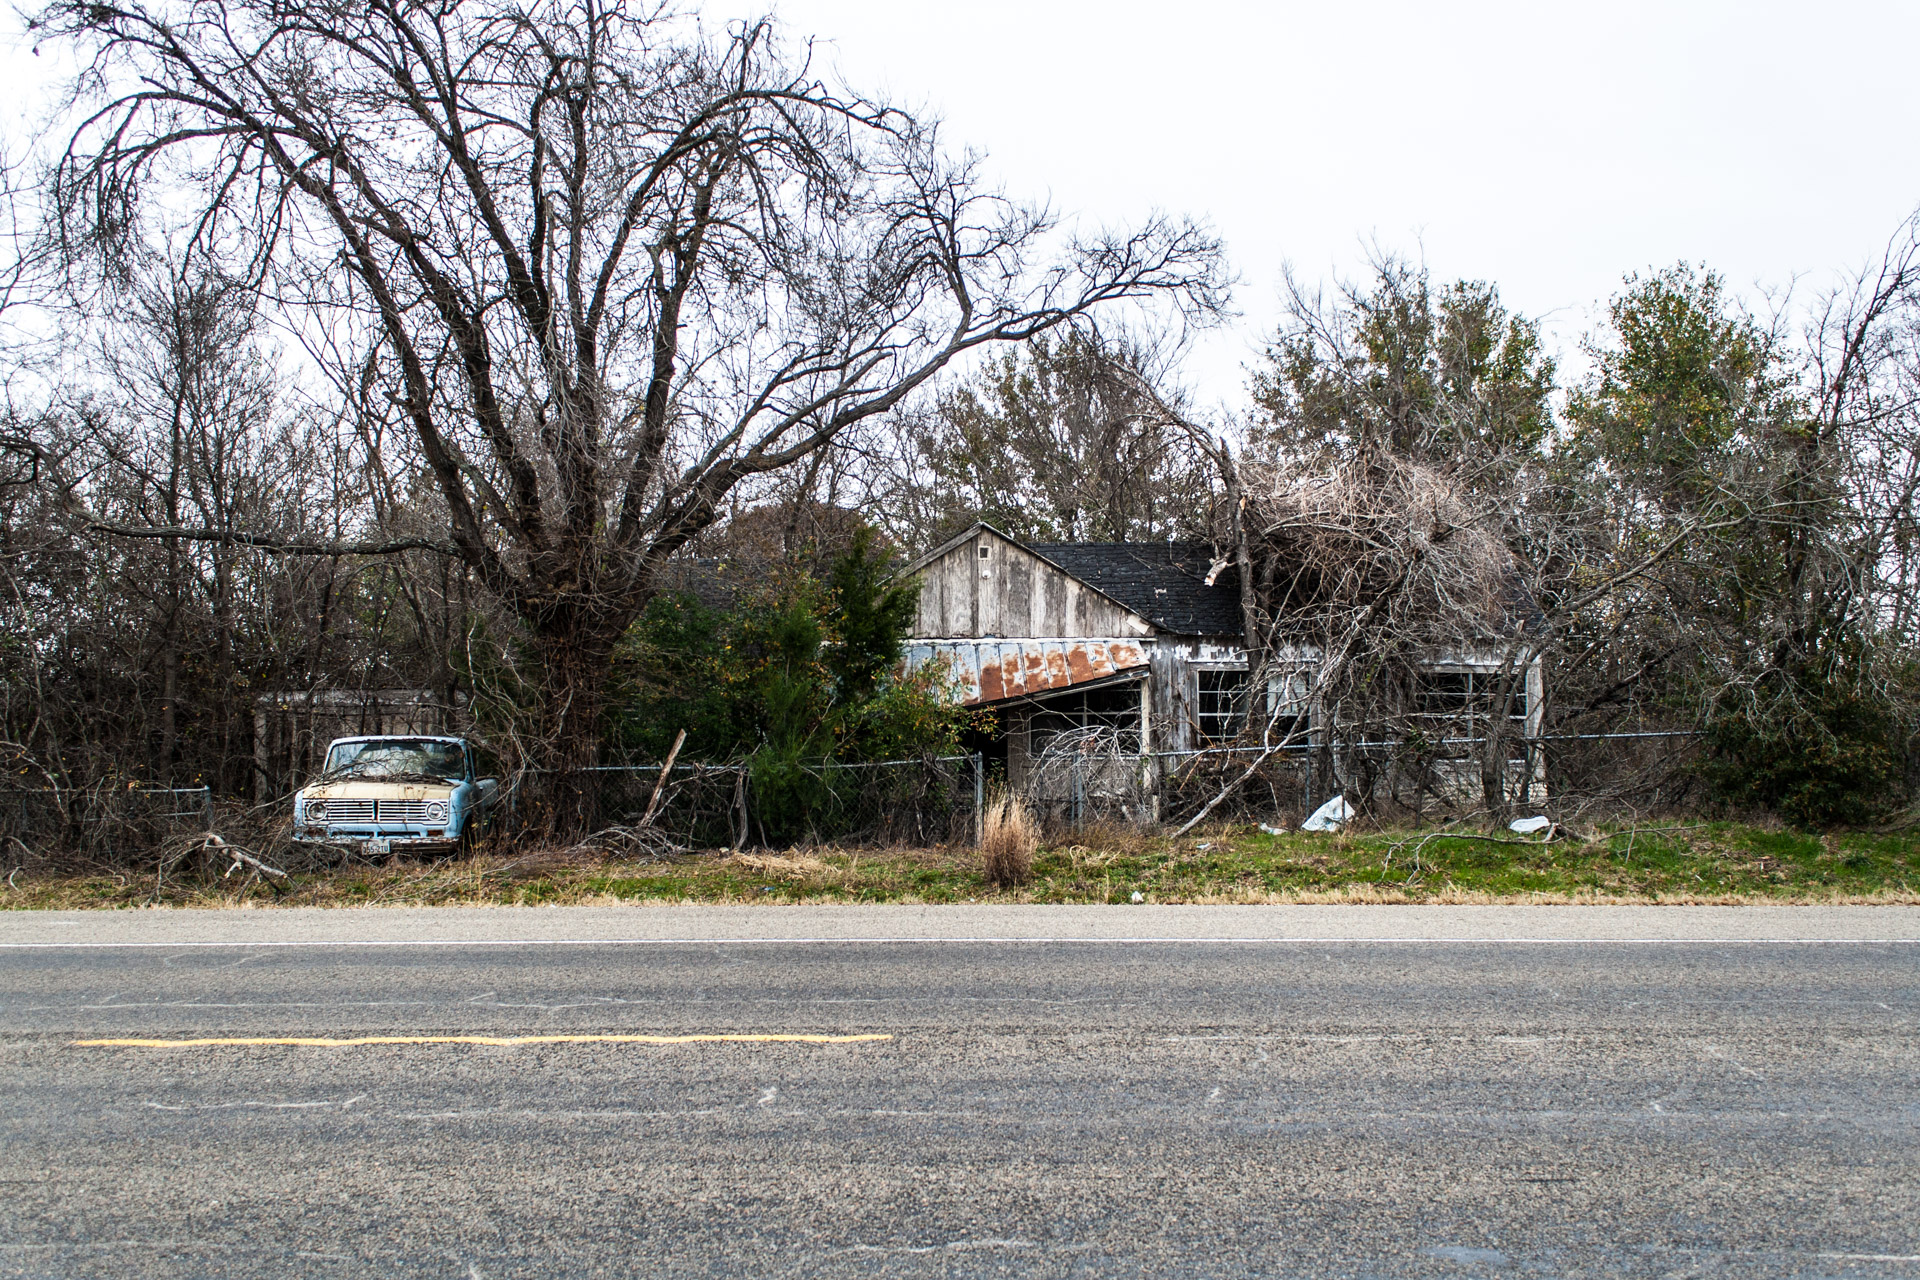 Reagan, Texas - A Branchy House and Truck (front far)